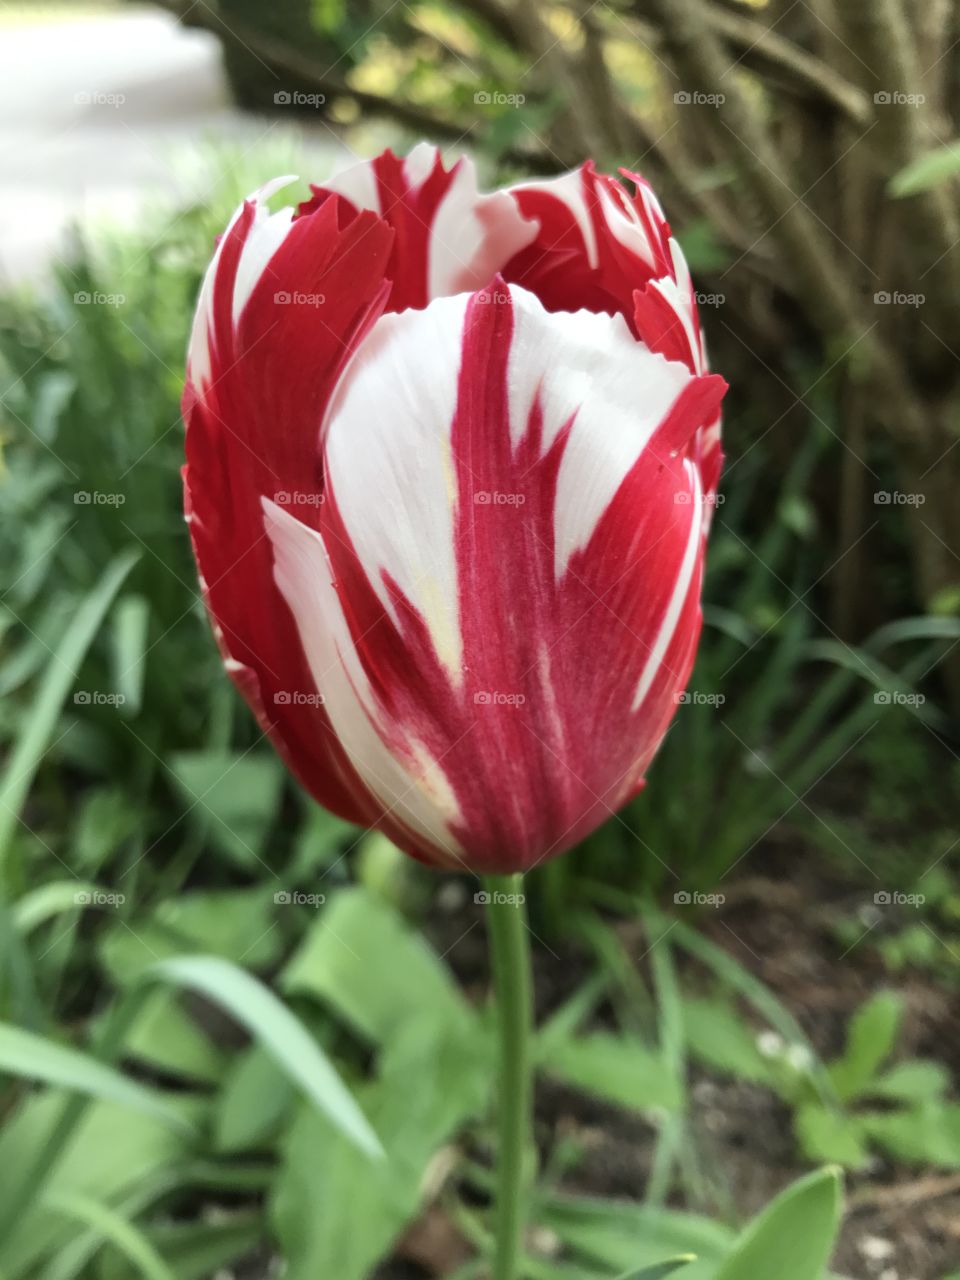 Spring tulip, England, April 2017